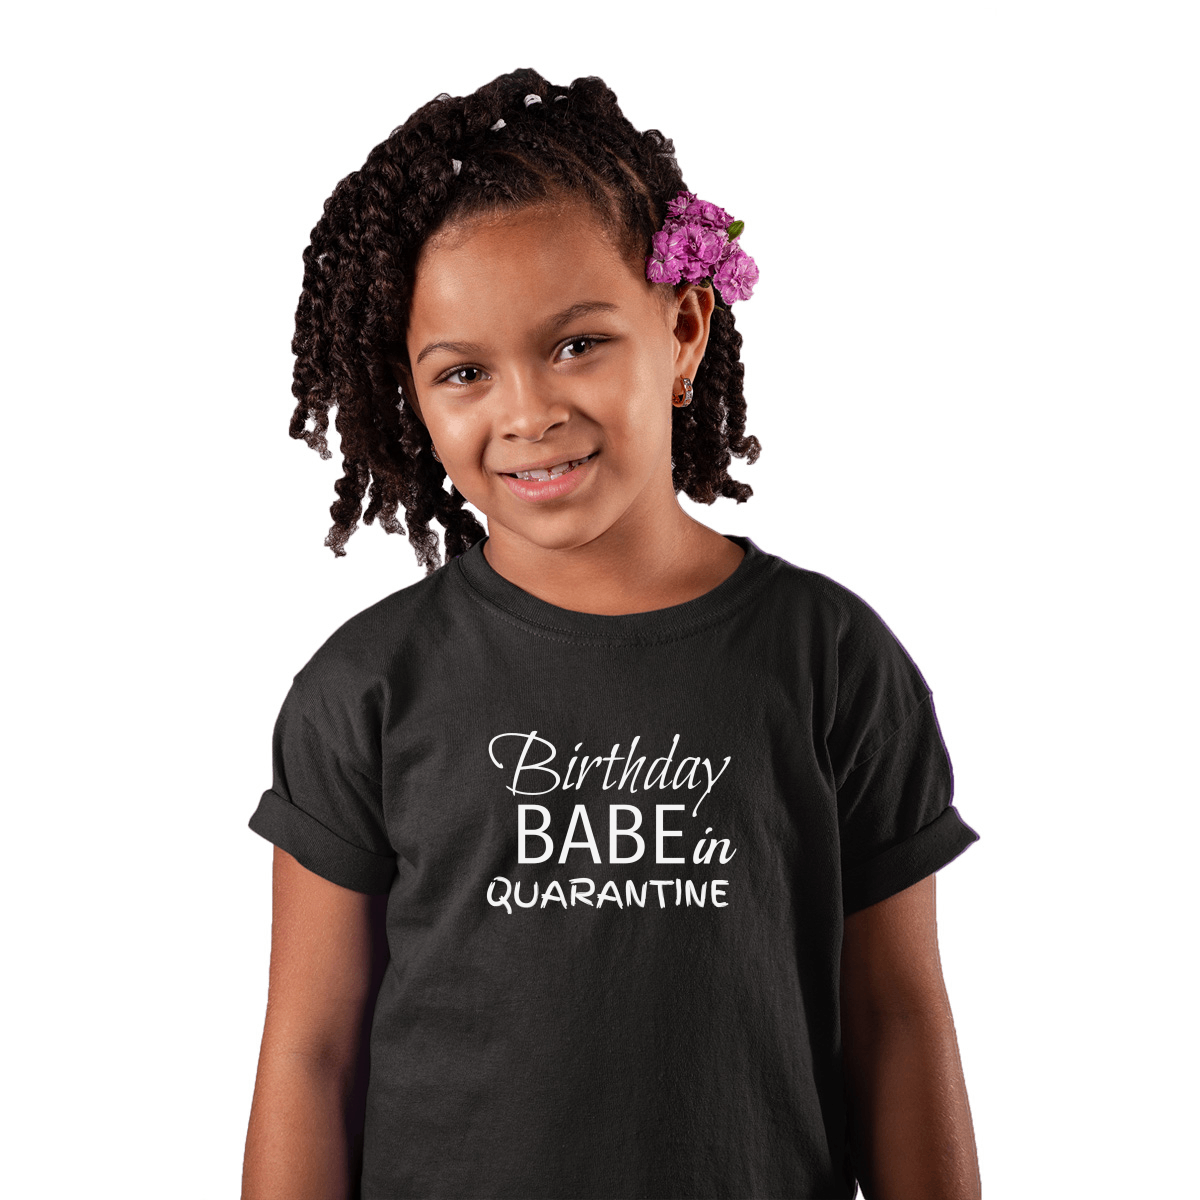 Birthday Babe in Quarantine Kids T-shirt | Black